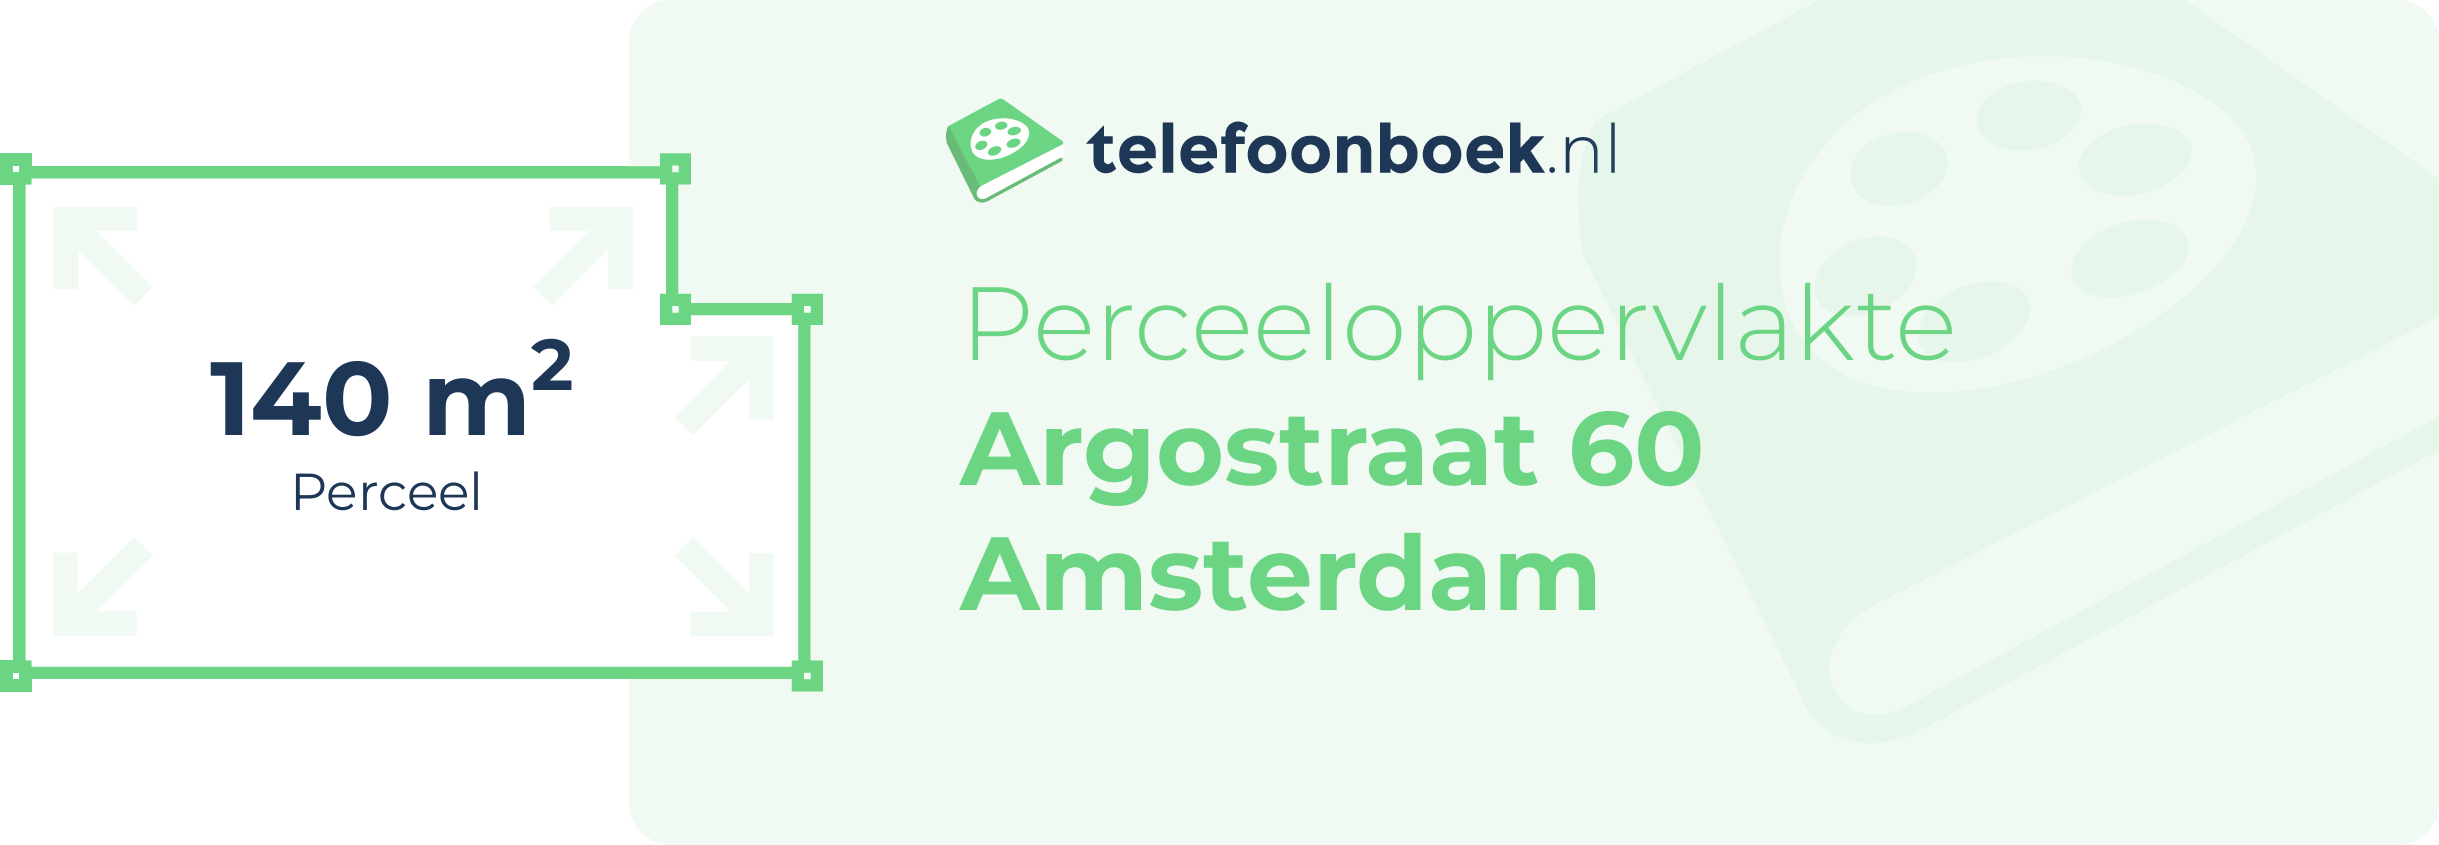 Perceeloppervlakte Argostraat 60 Amsterdam